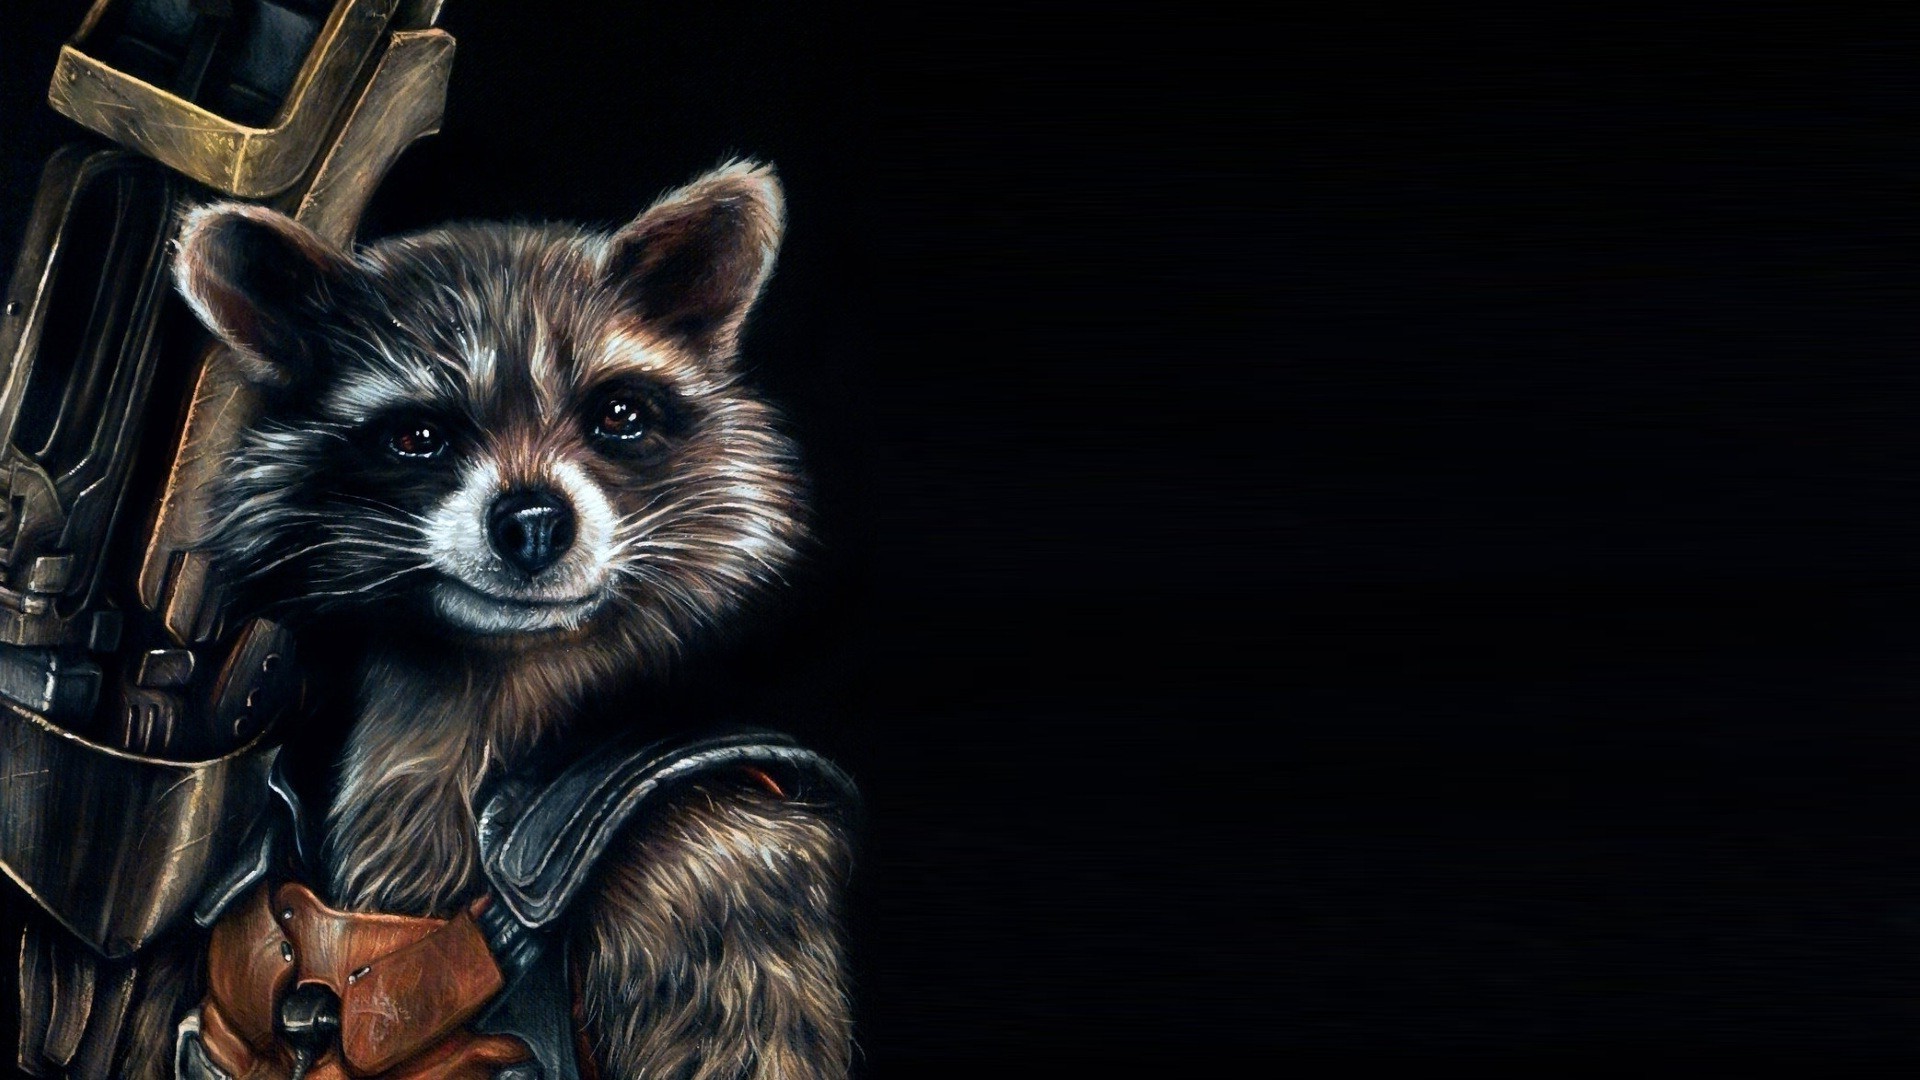 Guardians Of The Galaxy, Comics, Movies, Rocket Raccoon, Artwork, Fictional, Black Background Wallpaper